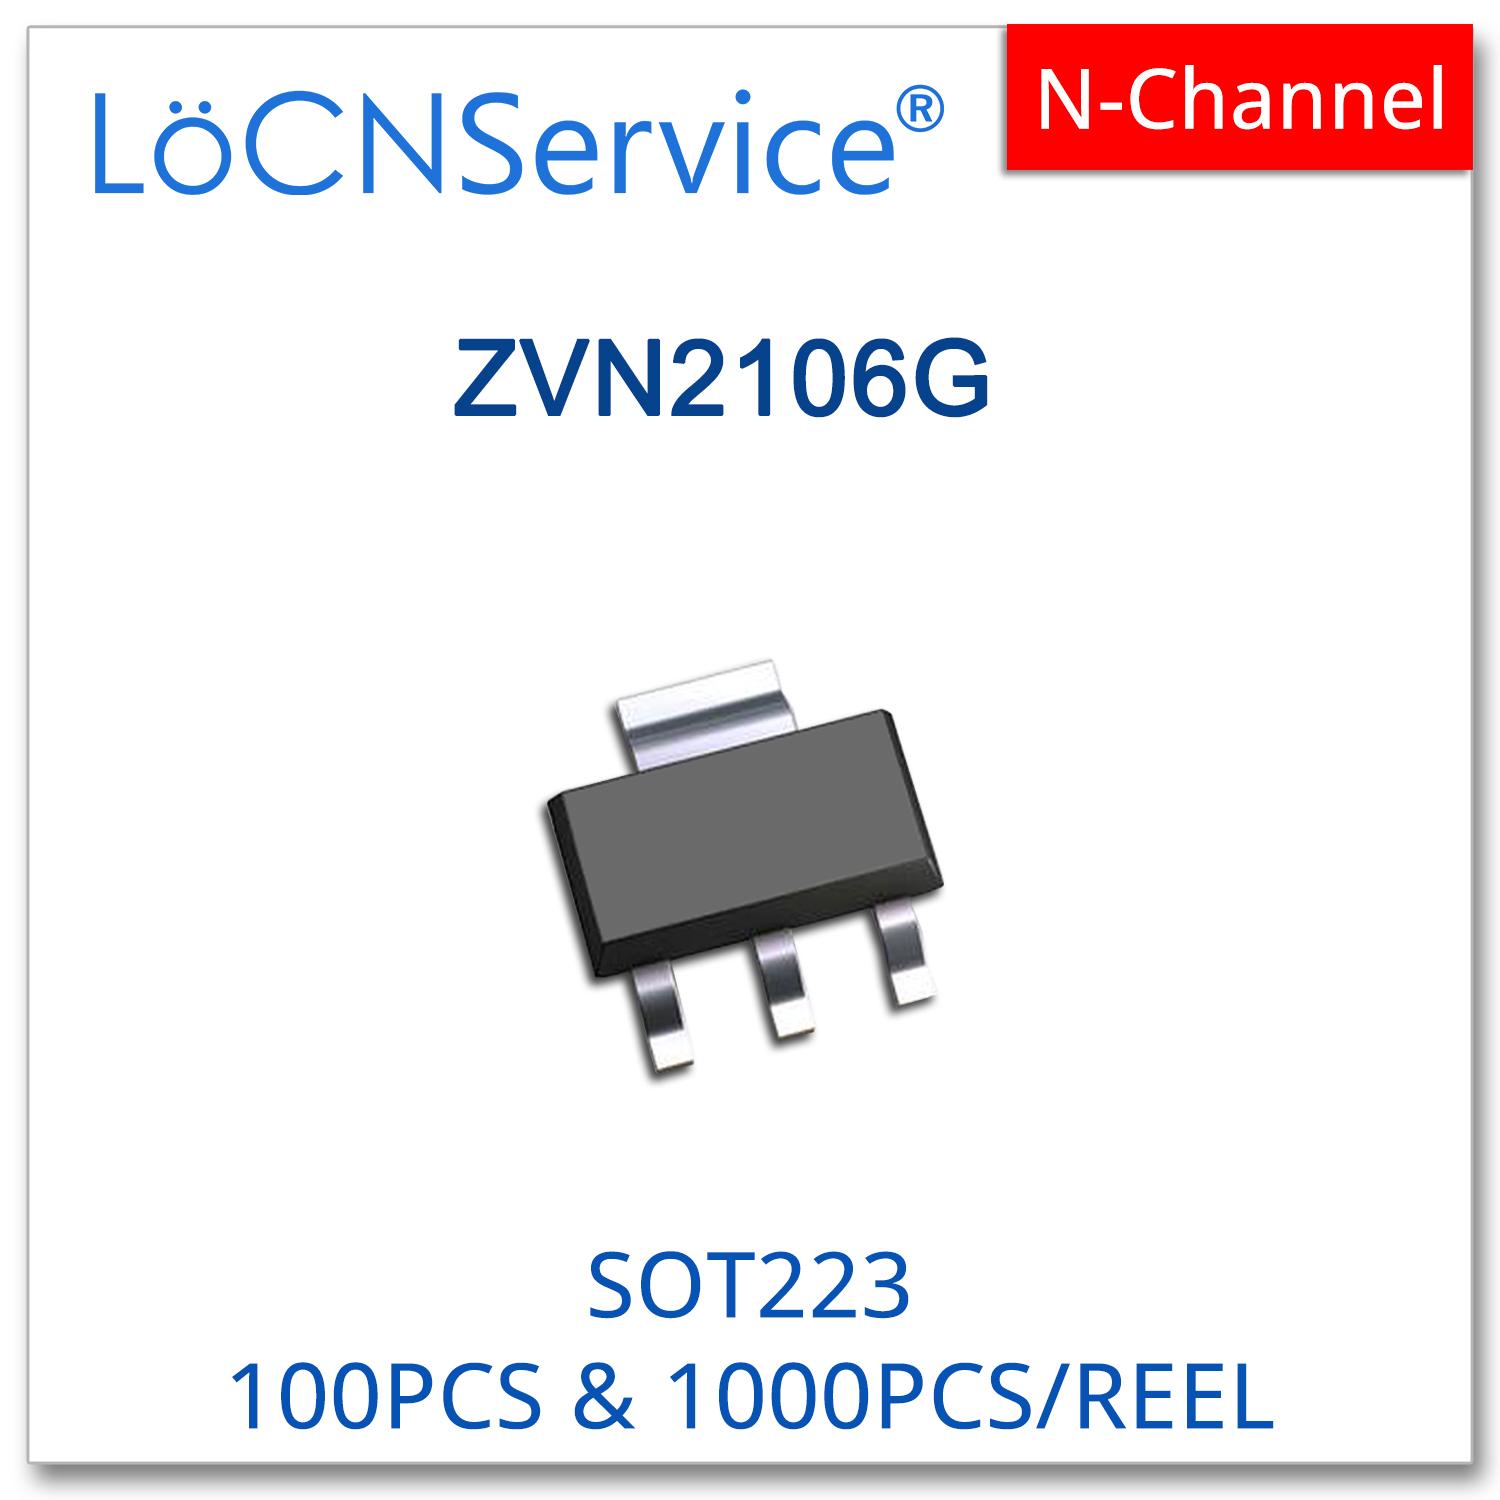 Изображение товара: LoCNService 1000 шт. 100 шт. ZVN2106G SOT223 высокое качество, сделано в Китае N-Channel 60V 0.71A ZVN2106 ZVN